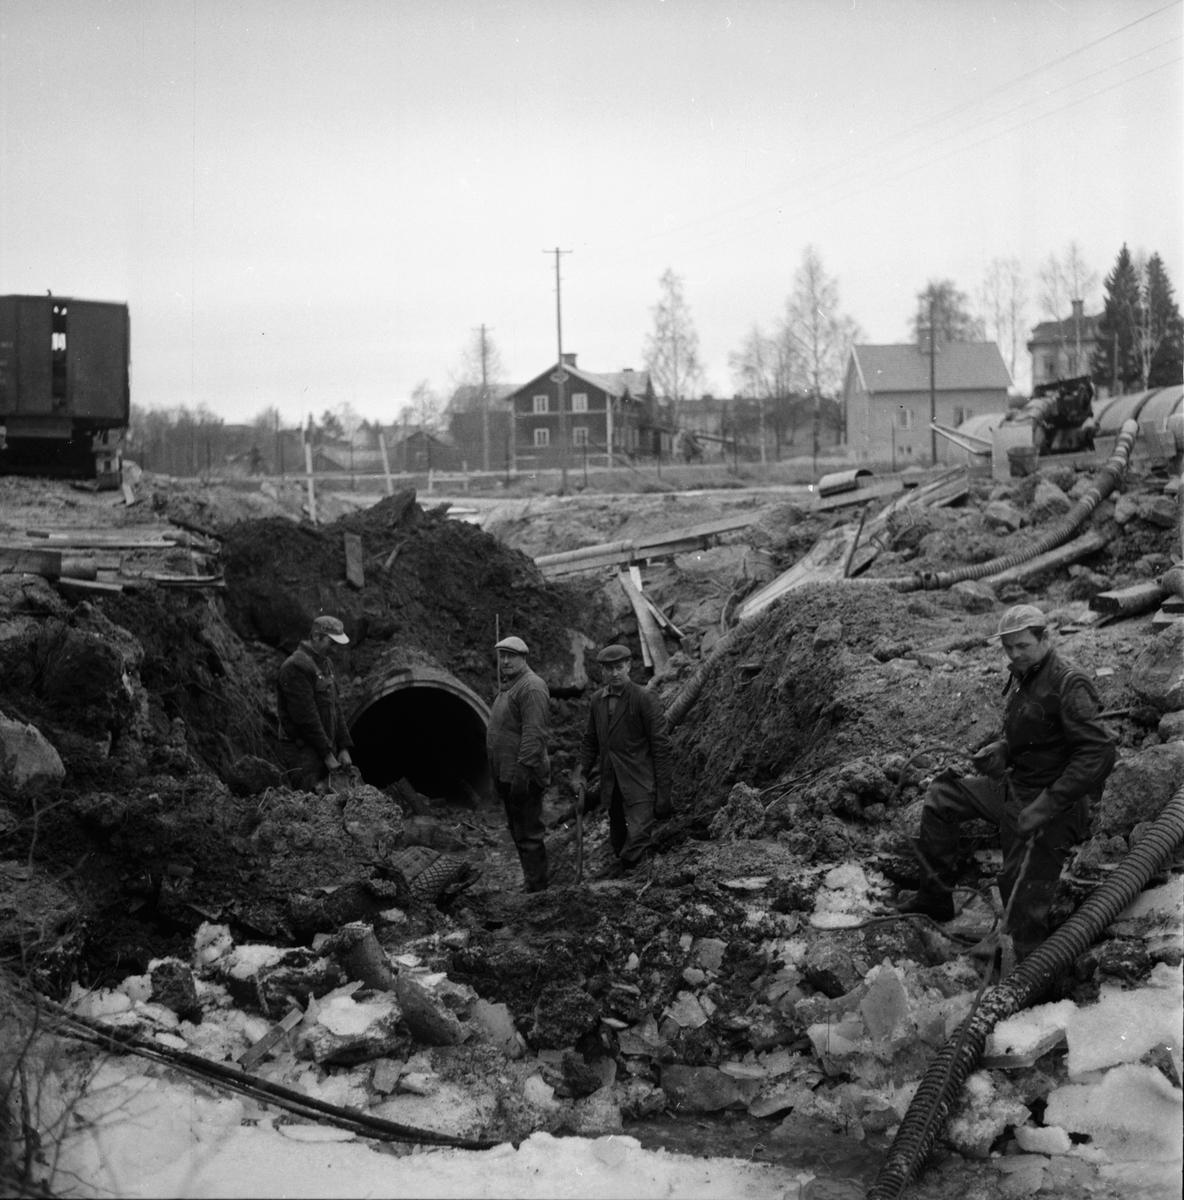 Grävar-Nisse m.fl.
Edsbyn 10/11 1956